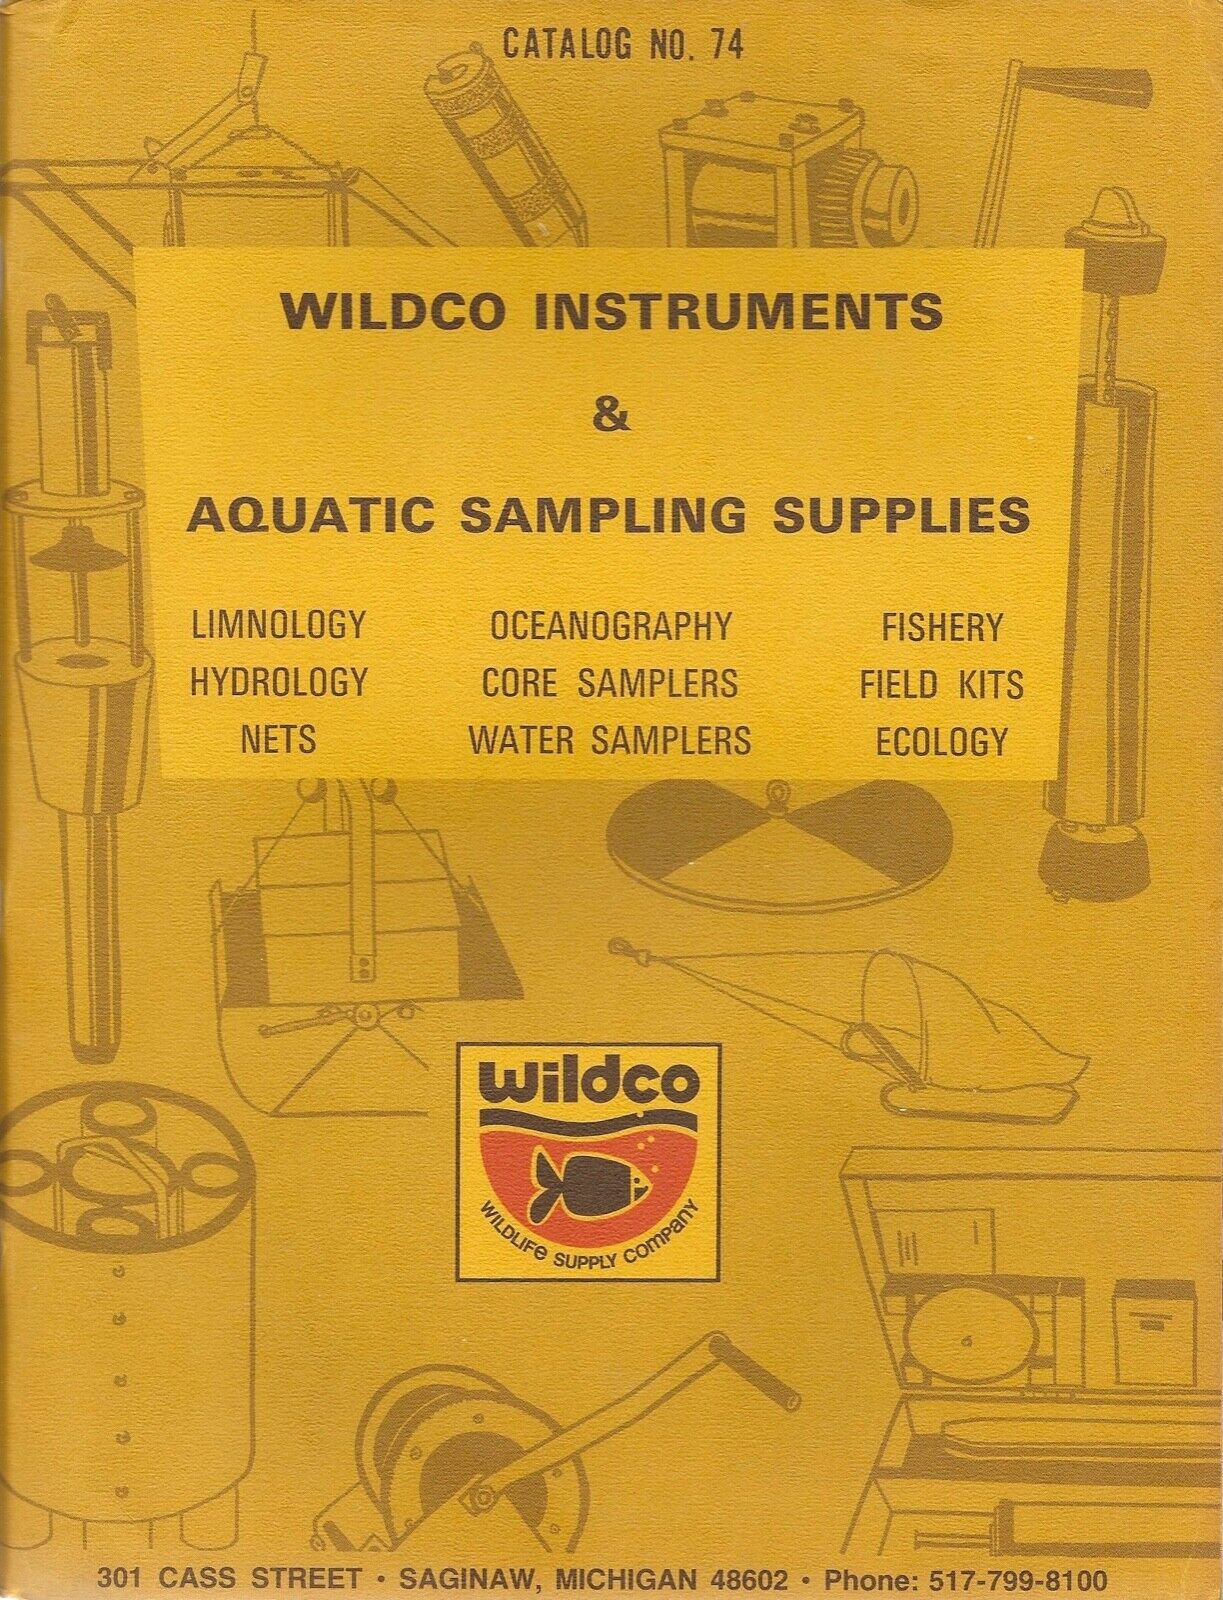 Saginaw Michigan Wildco Wildlife Supply Company Catalog 73 & 74 Luna B. Leopold